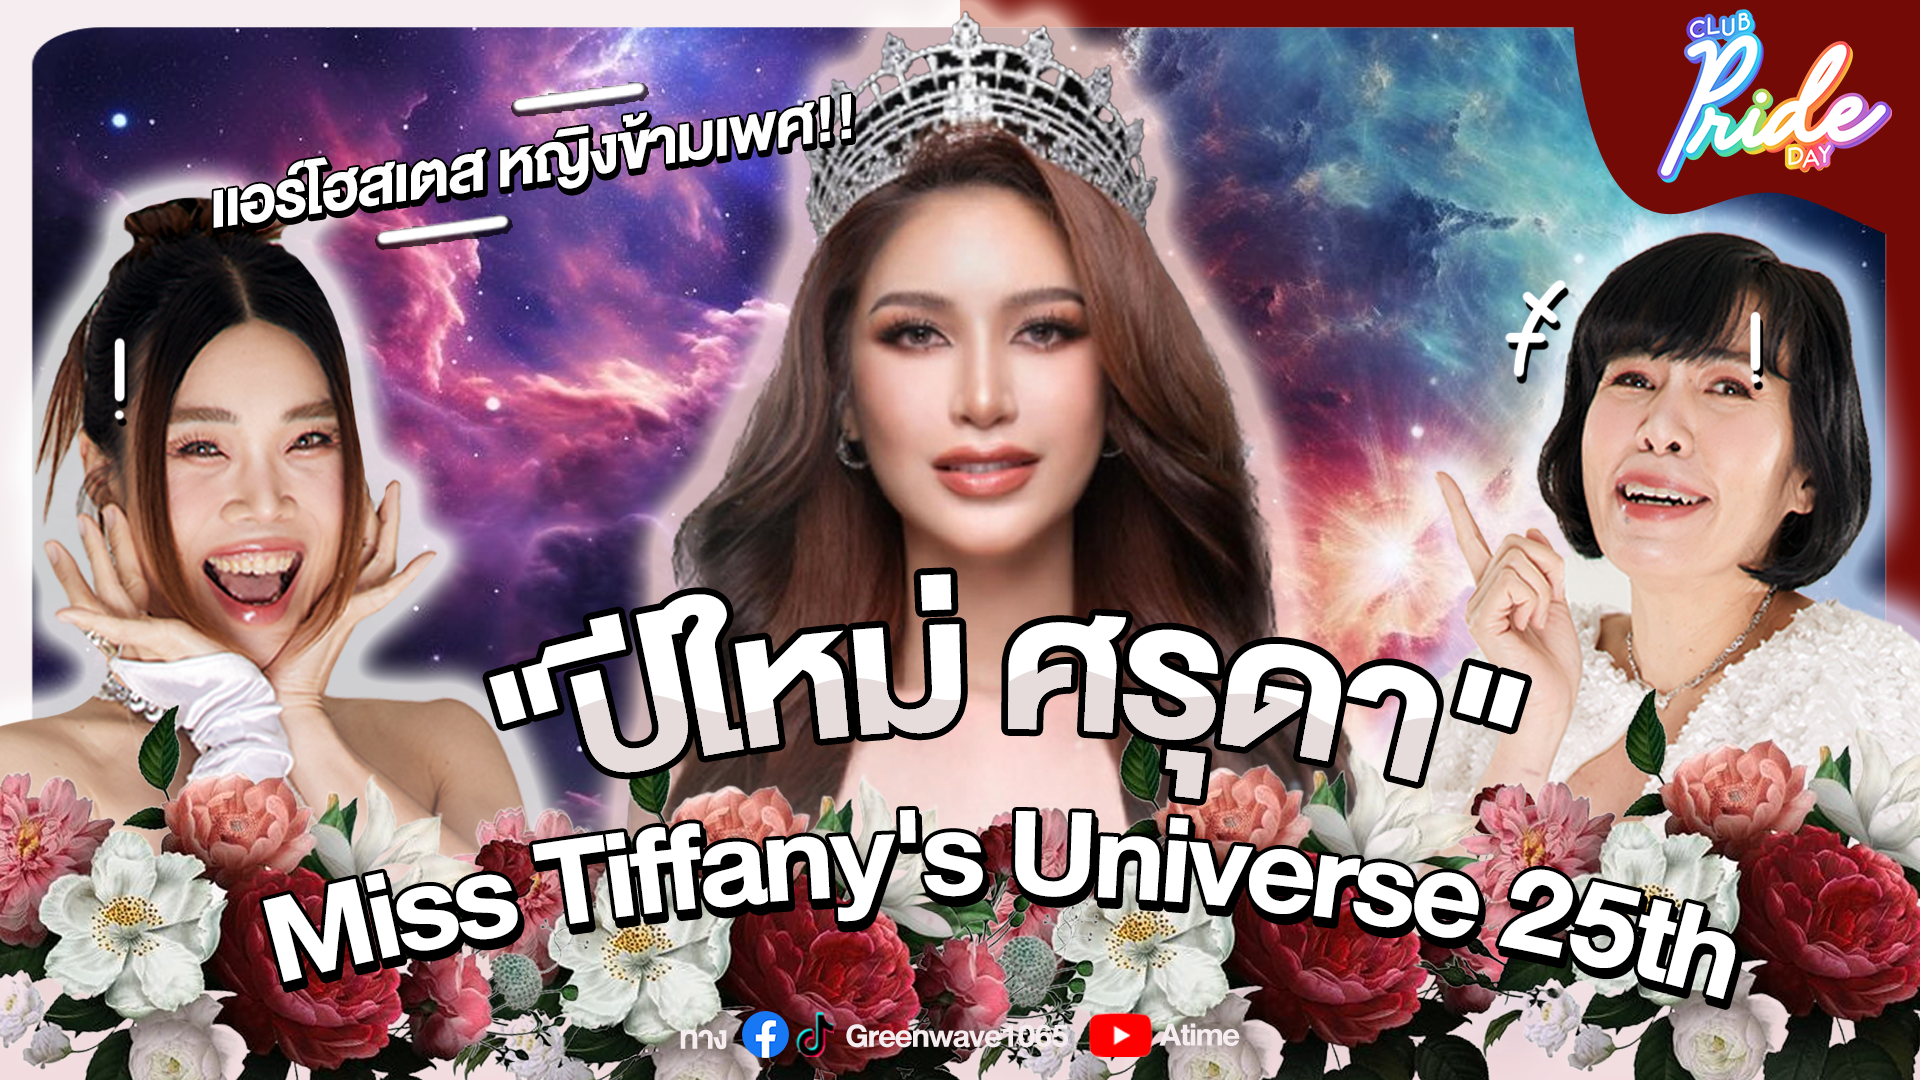 Club Pride Day x คุณ ปีใหม่ Miss Tiffany's Universe 25th | 7 มี.ค. 67